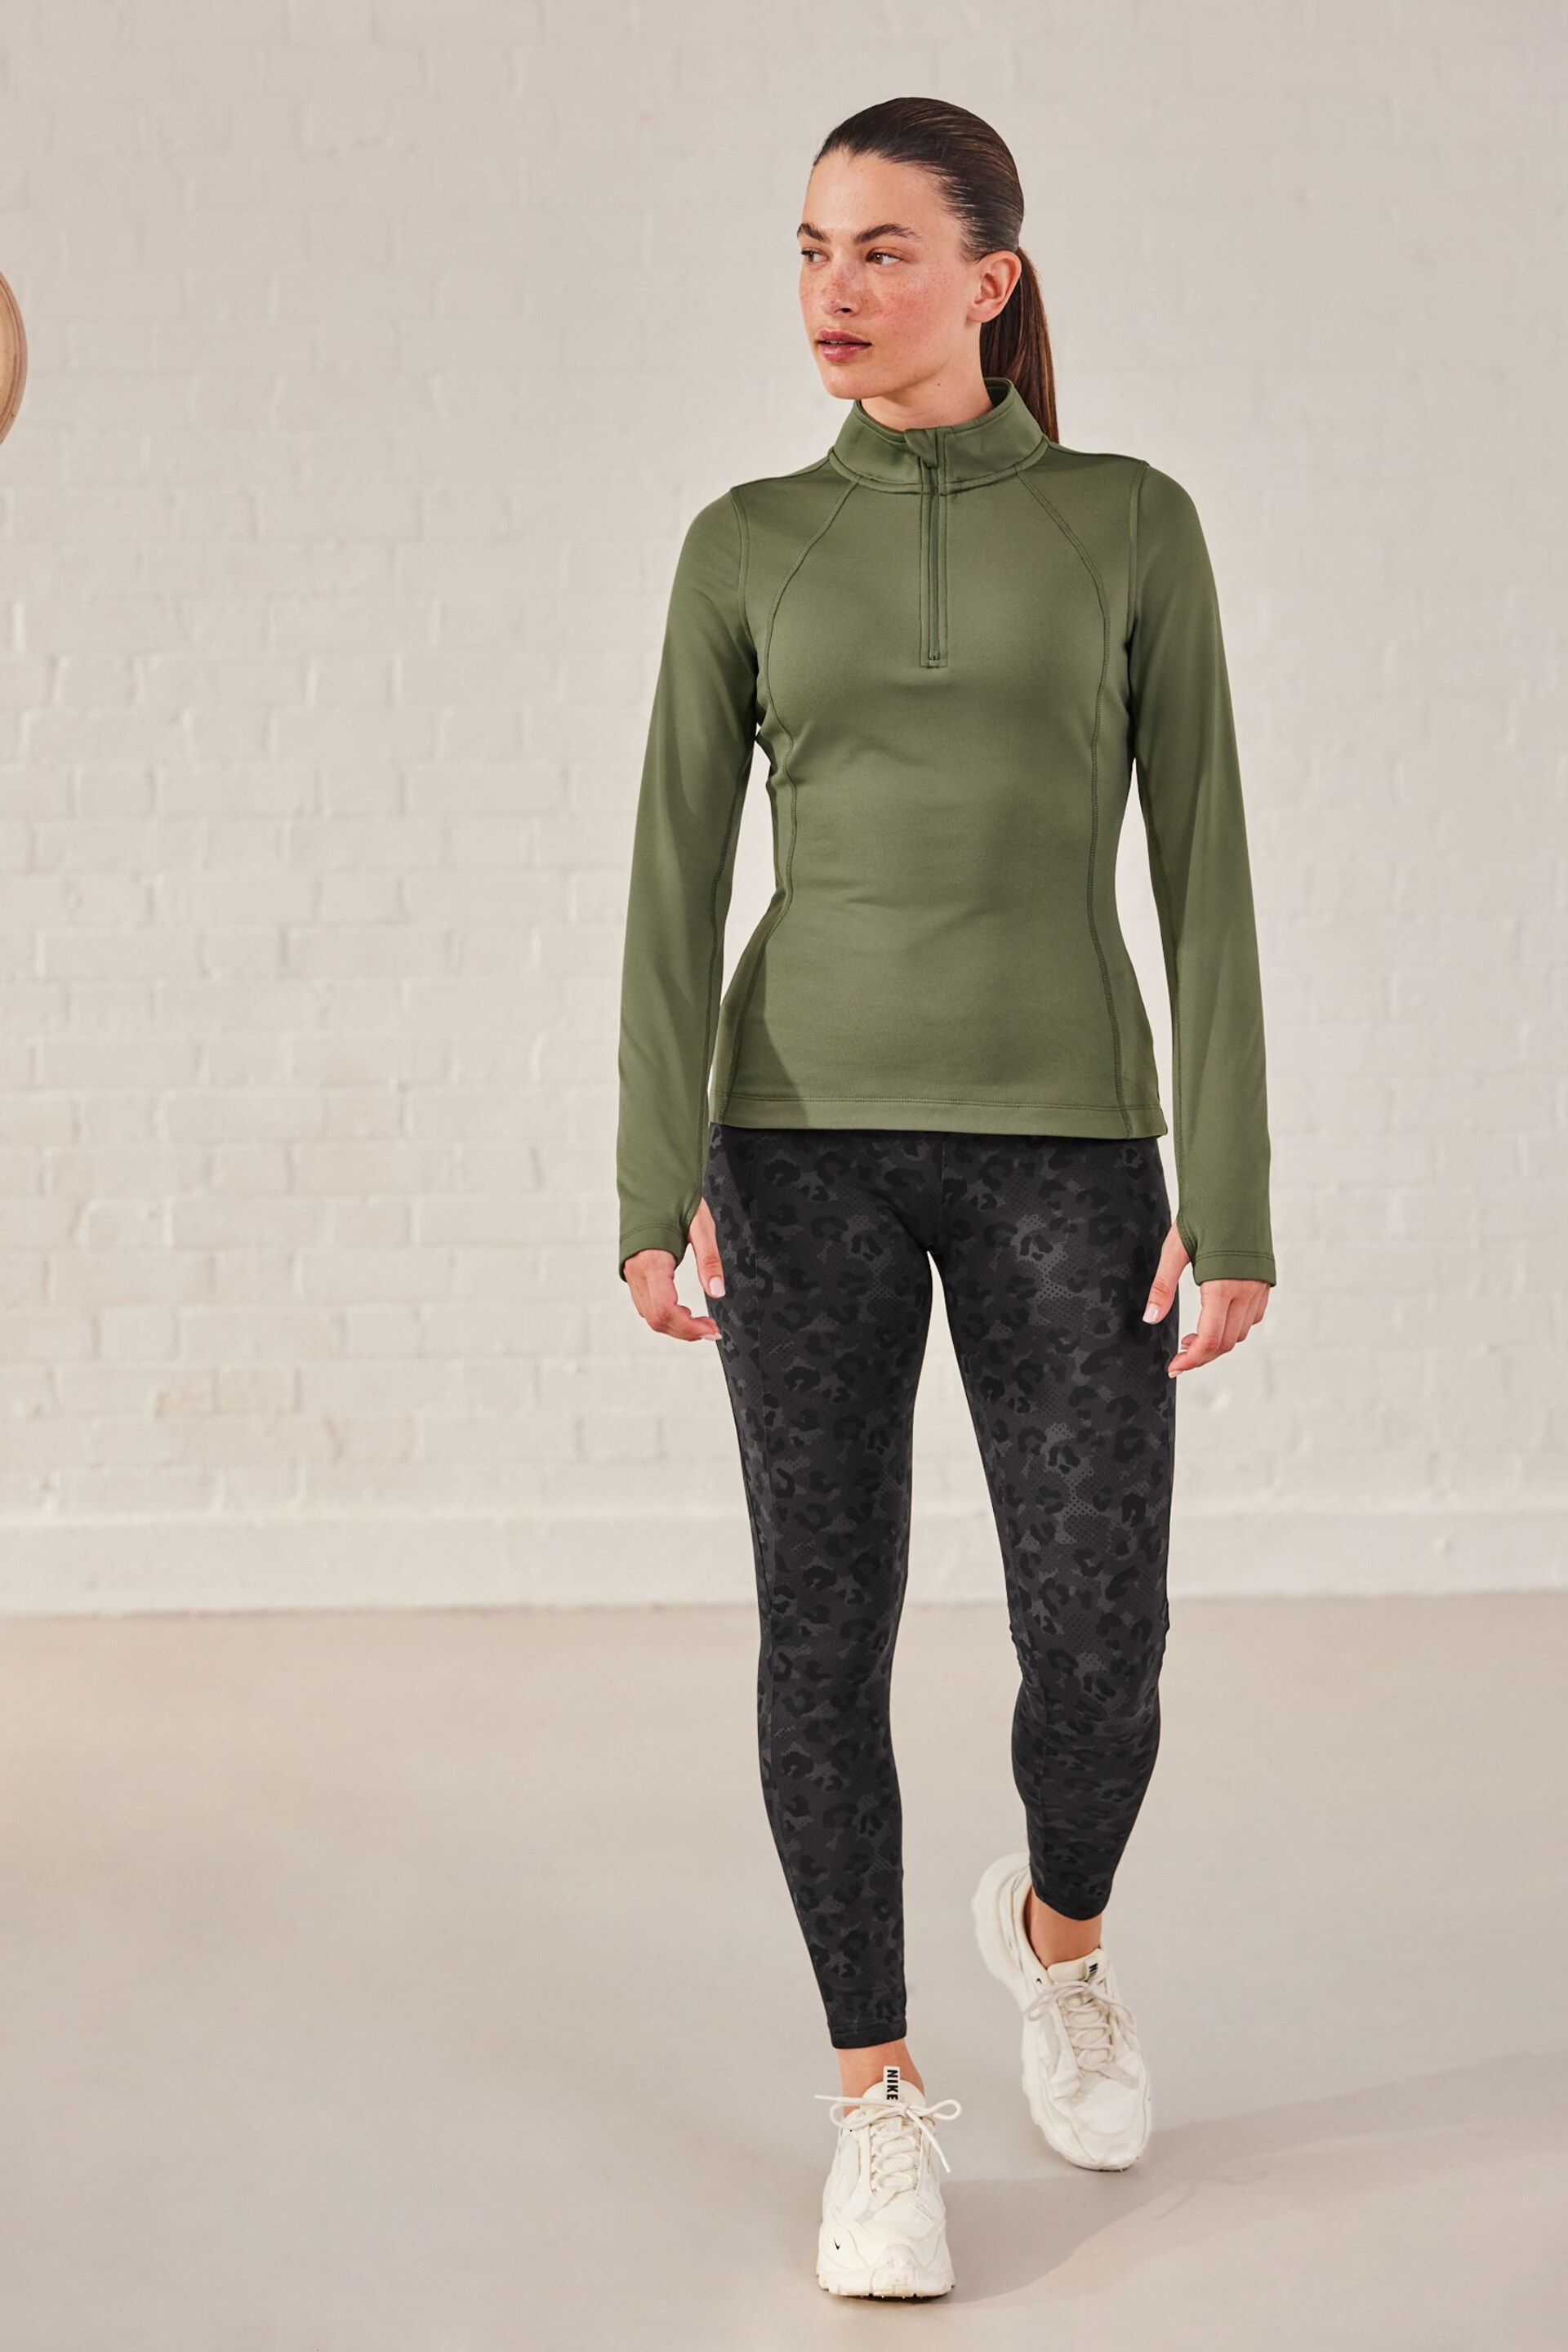 Khaki Green Elements Outdoor Fleece Lined Layer Top - Image 2 of 7